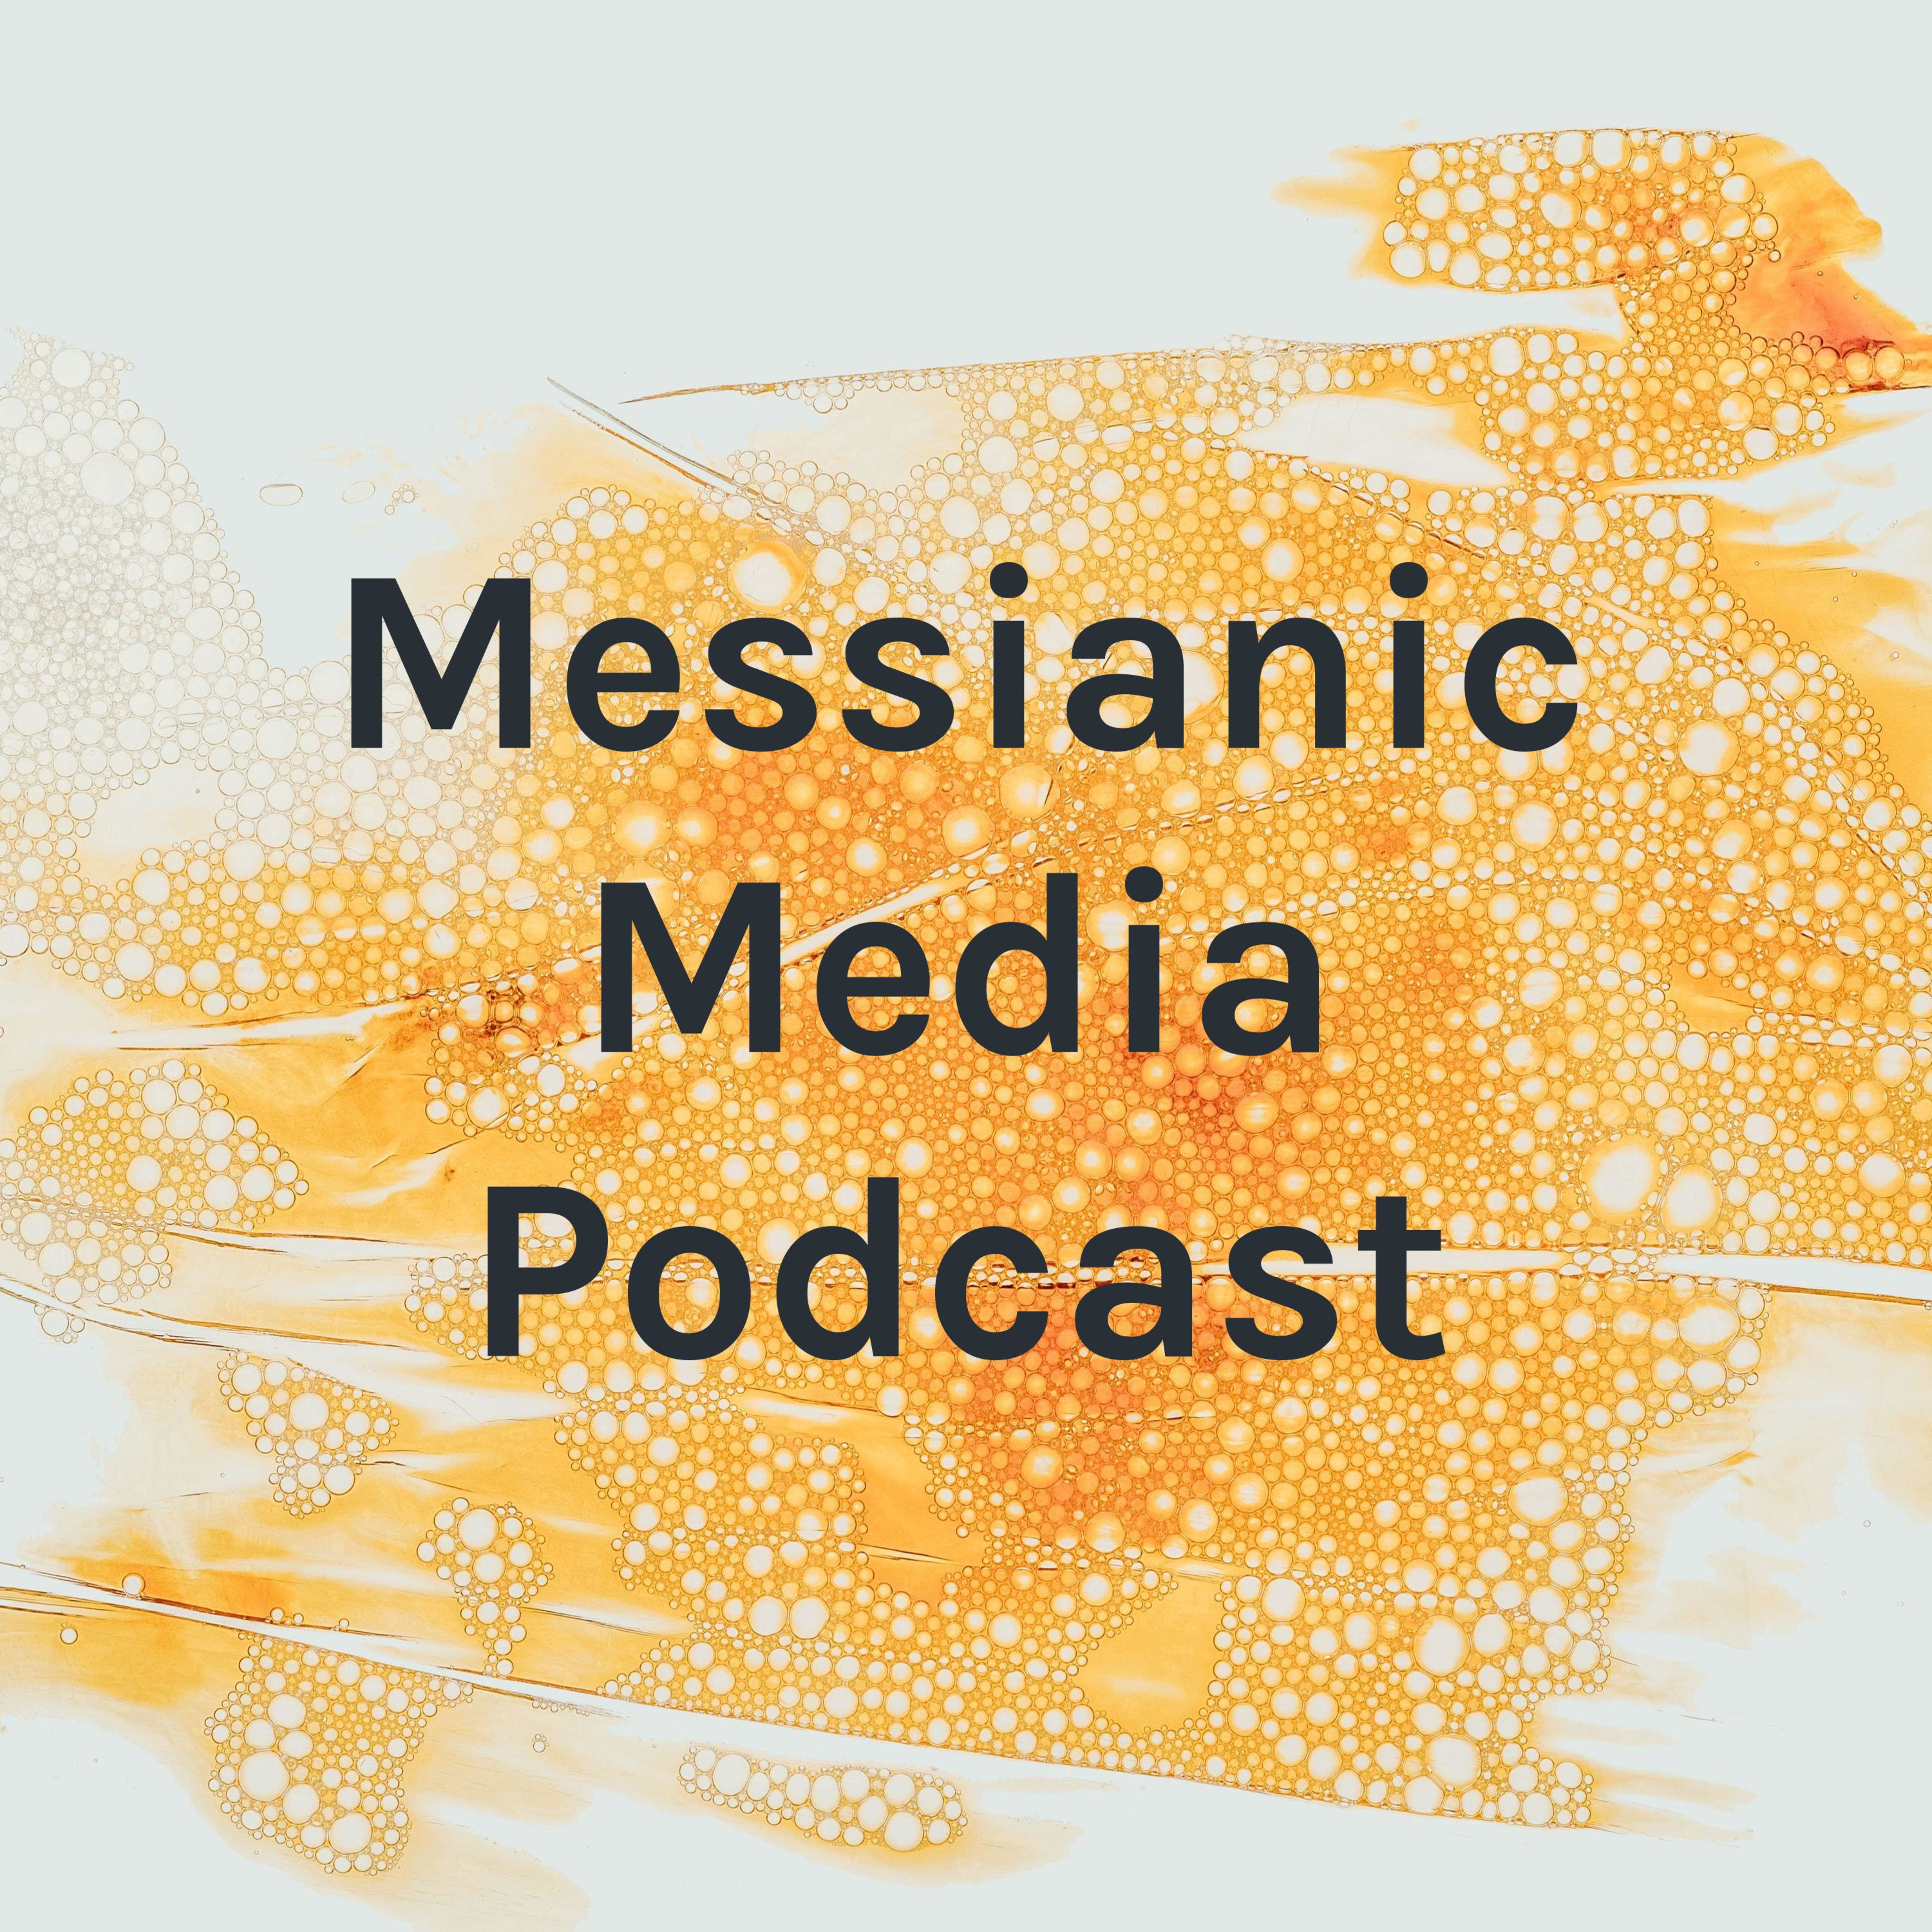 Messianic Media Podcast